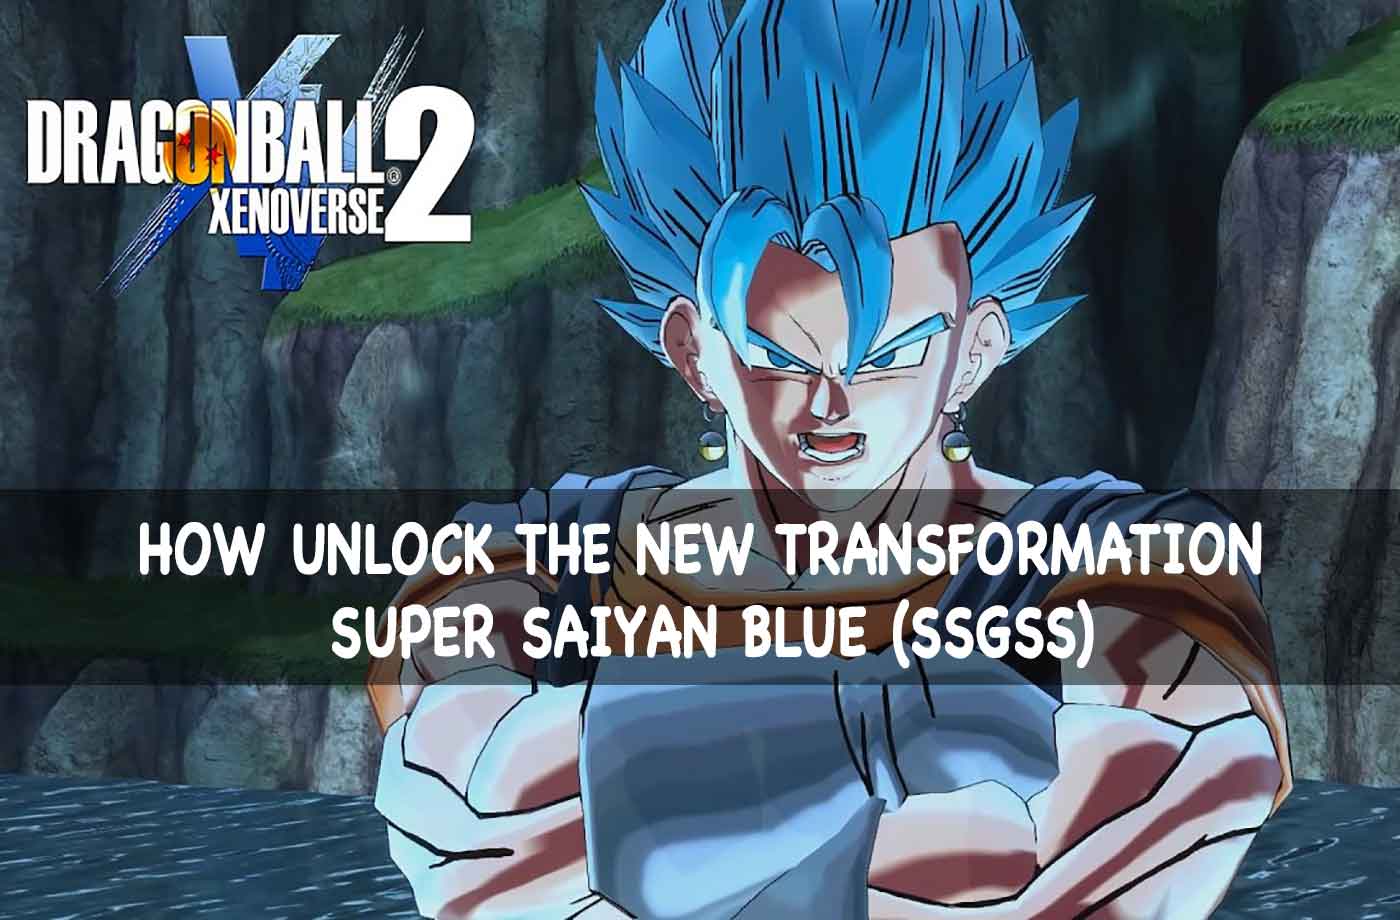 Guide Dragon Ball Xenoverse 2 how to unlock the Super Saiyan Blue (SSGSS) |  Kill The Game